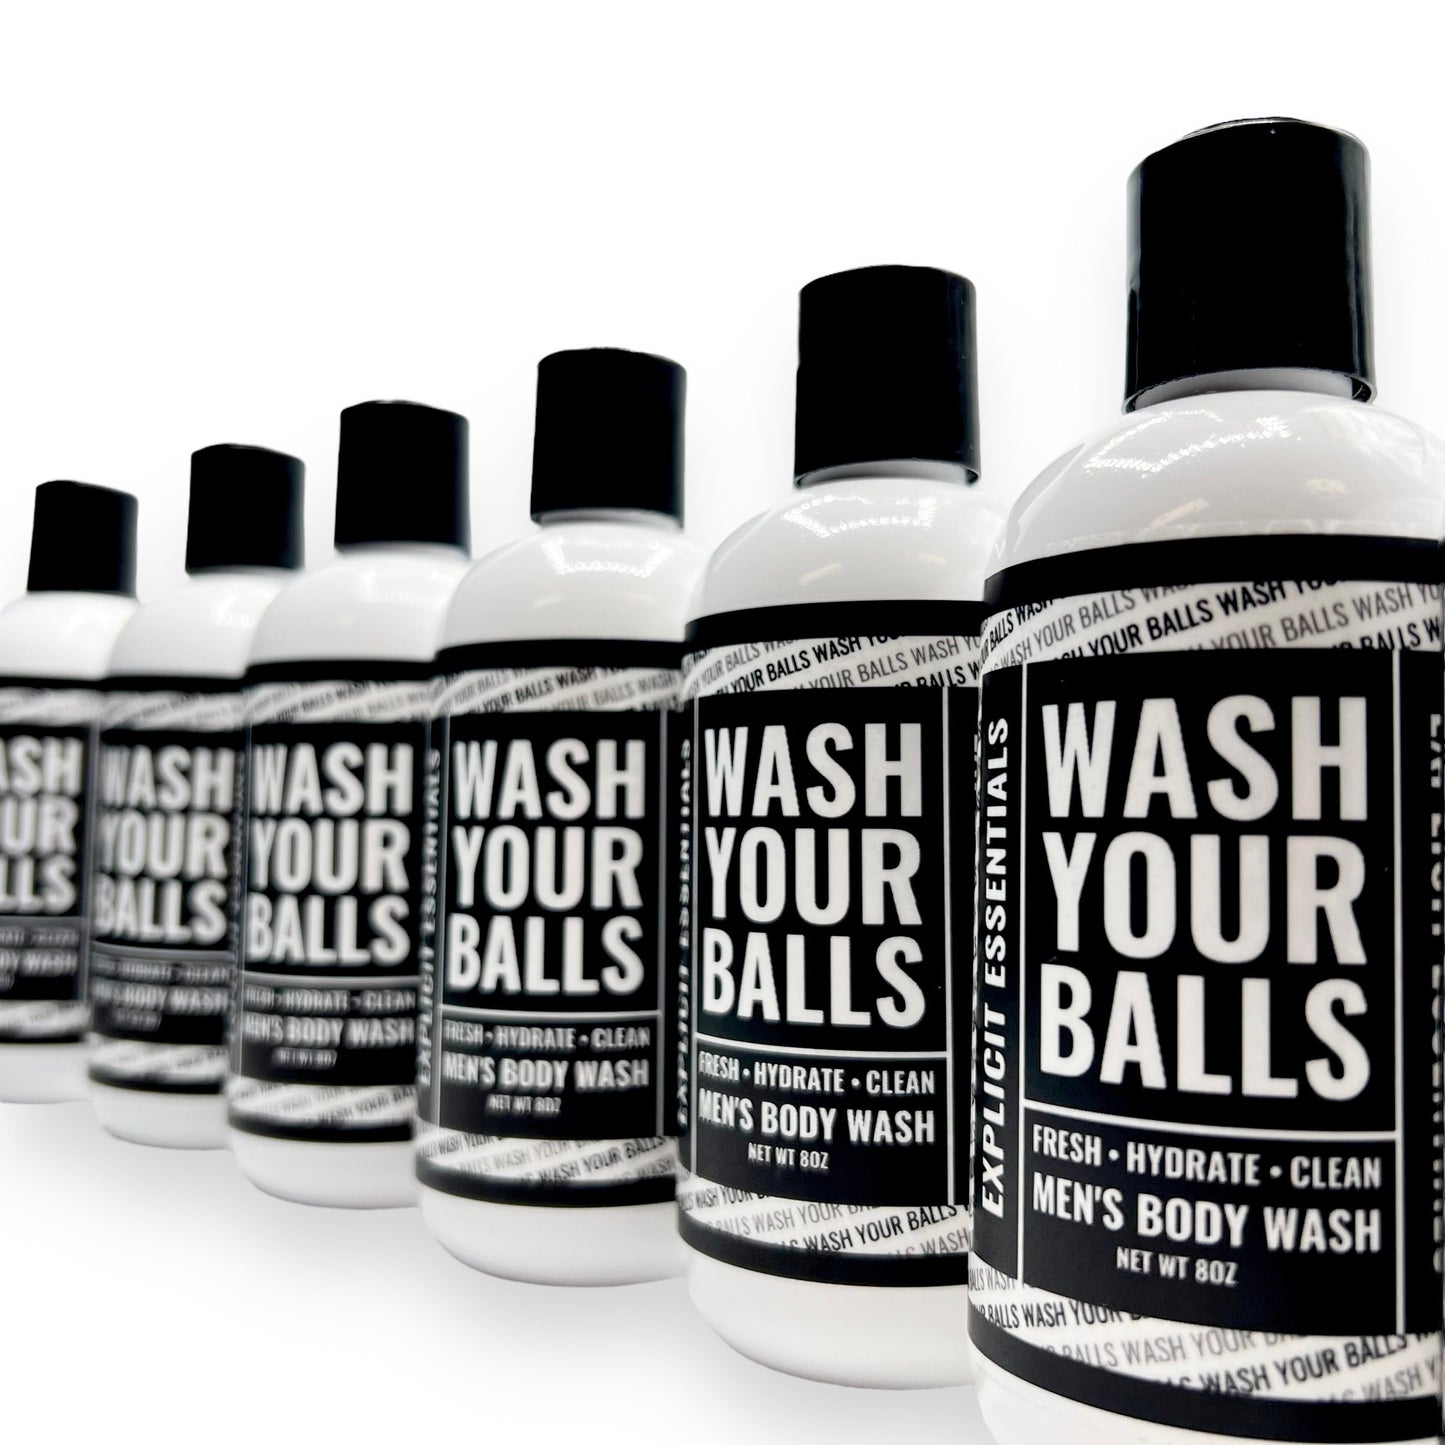 Wash Your Ball Body Wash